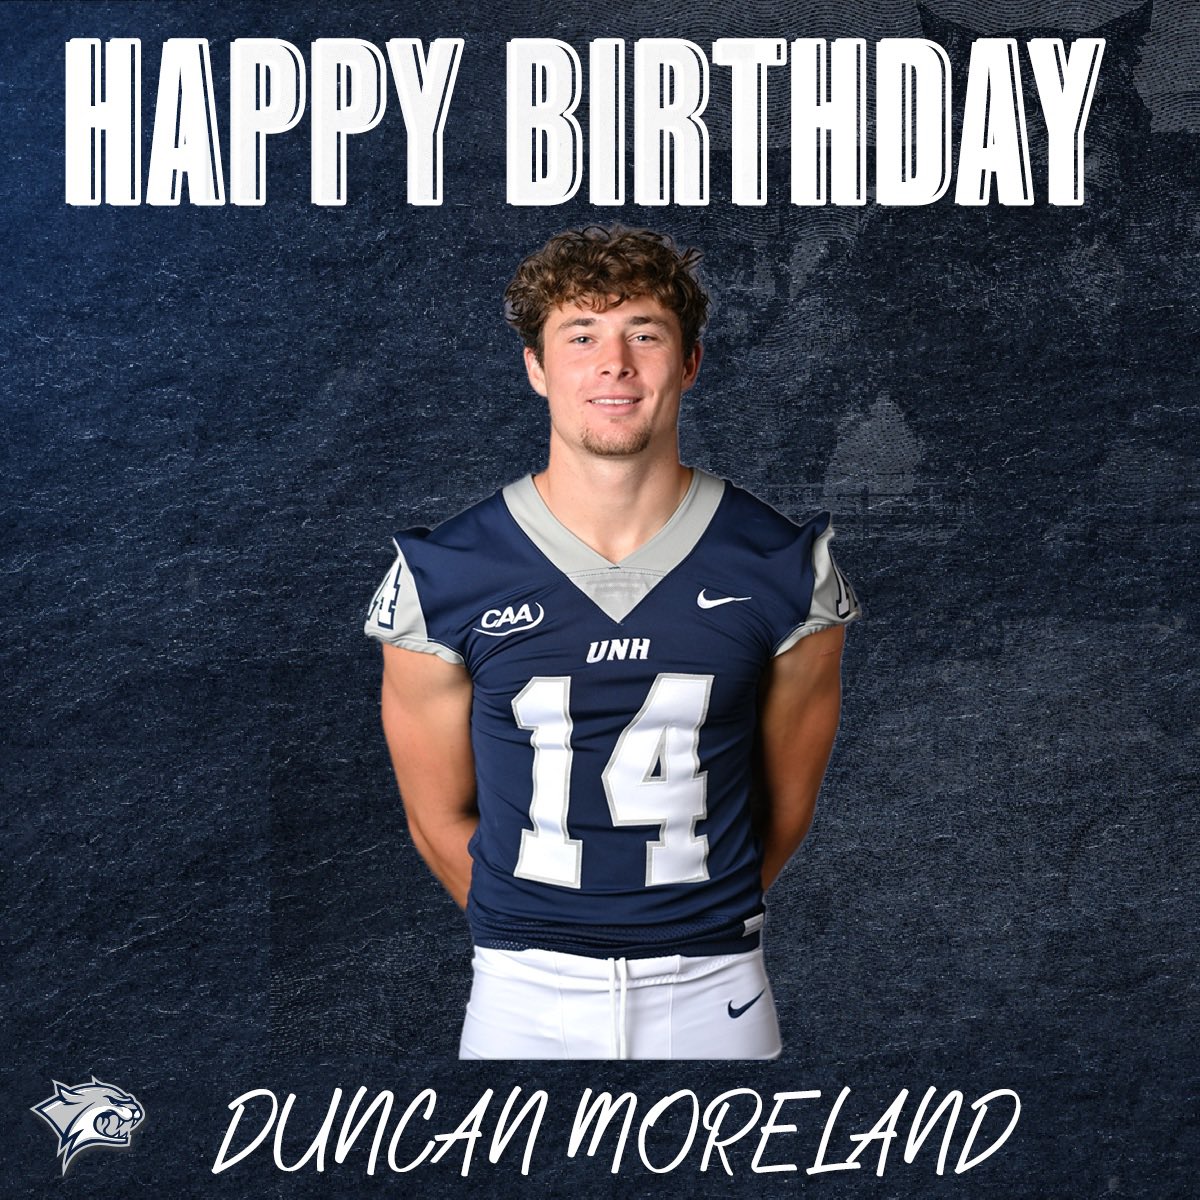 Happy birthday @DuncanMoreland